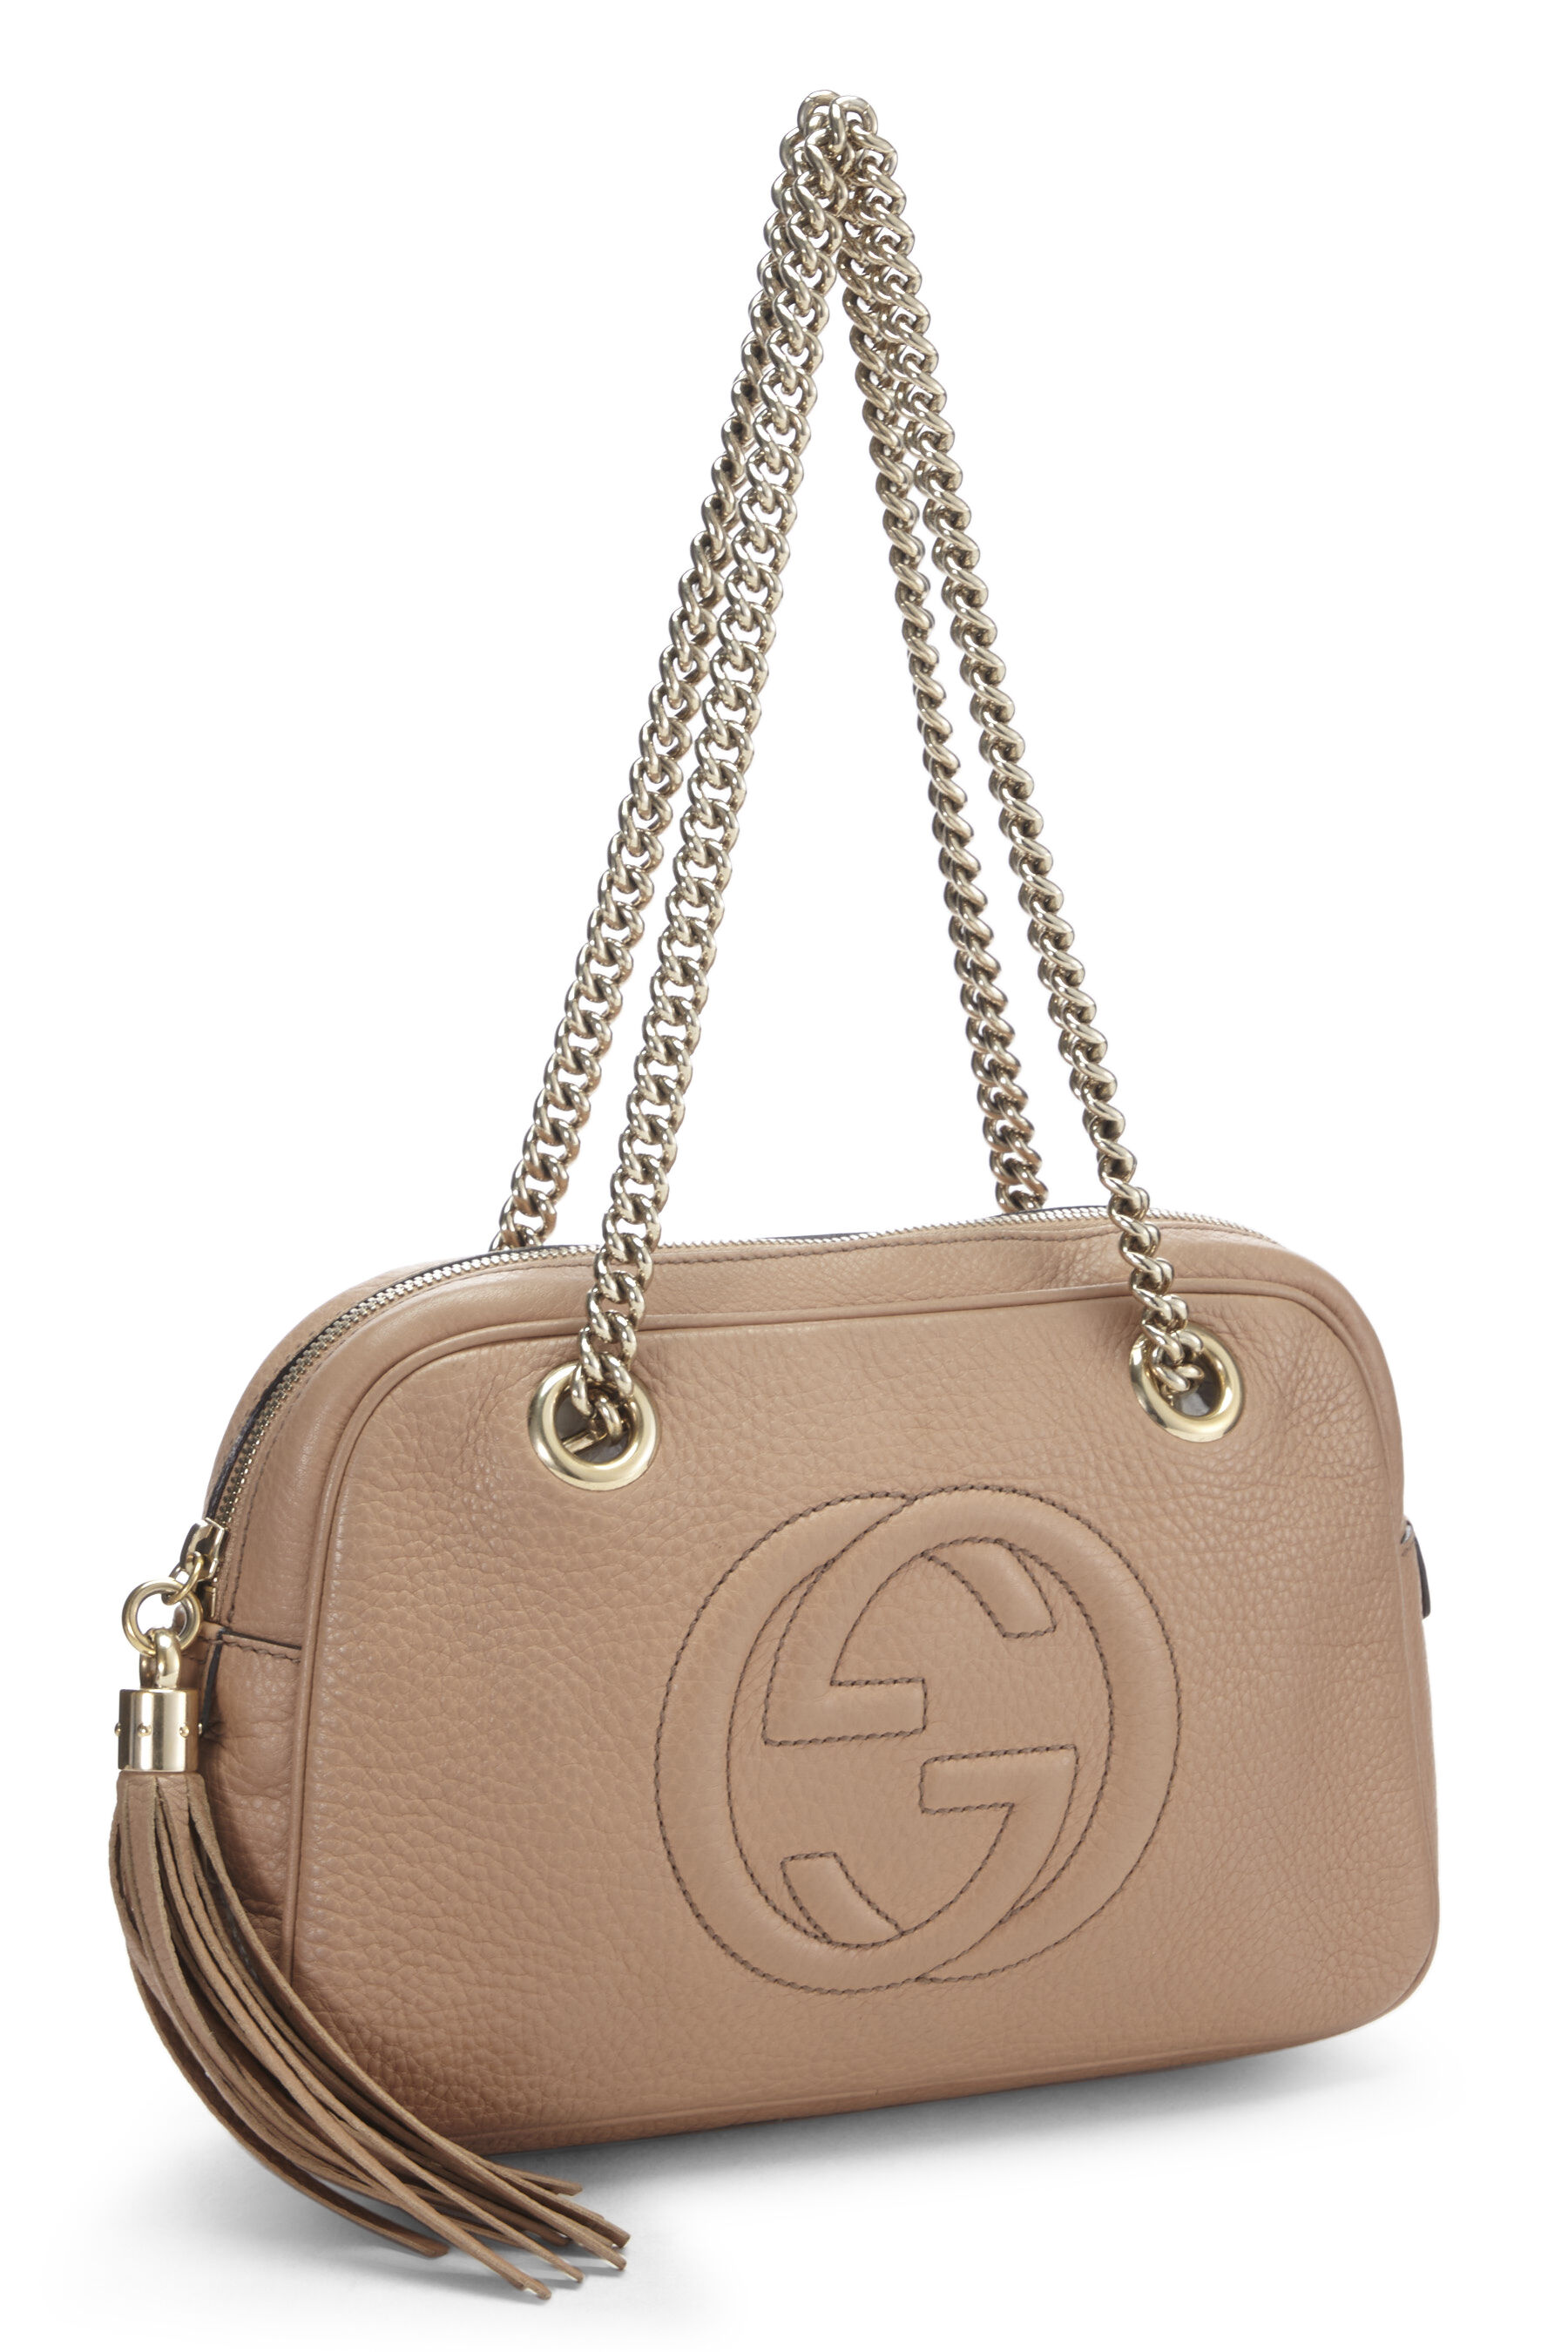 Enumerate Gum Rejsende købmand Gucci Beige Leather Soho Chain Shoulder Bag QFB1EW06IB000 | WGACA